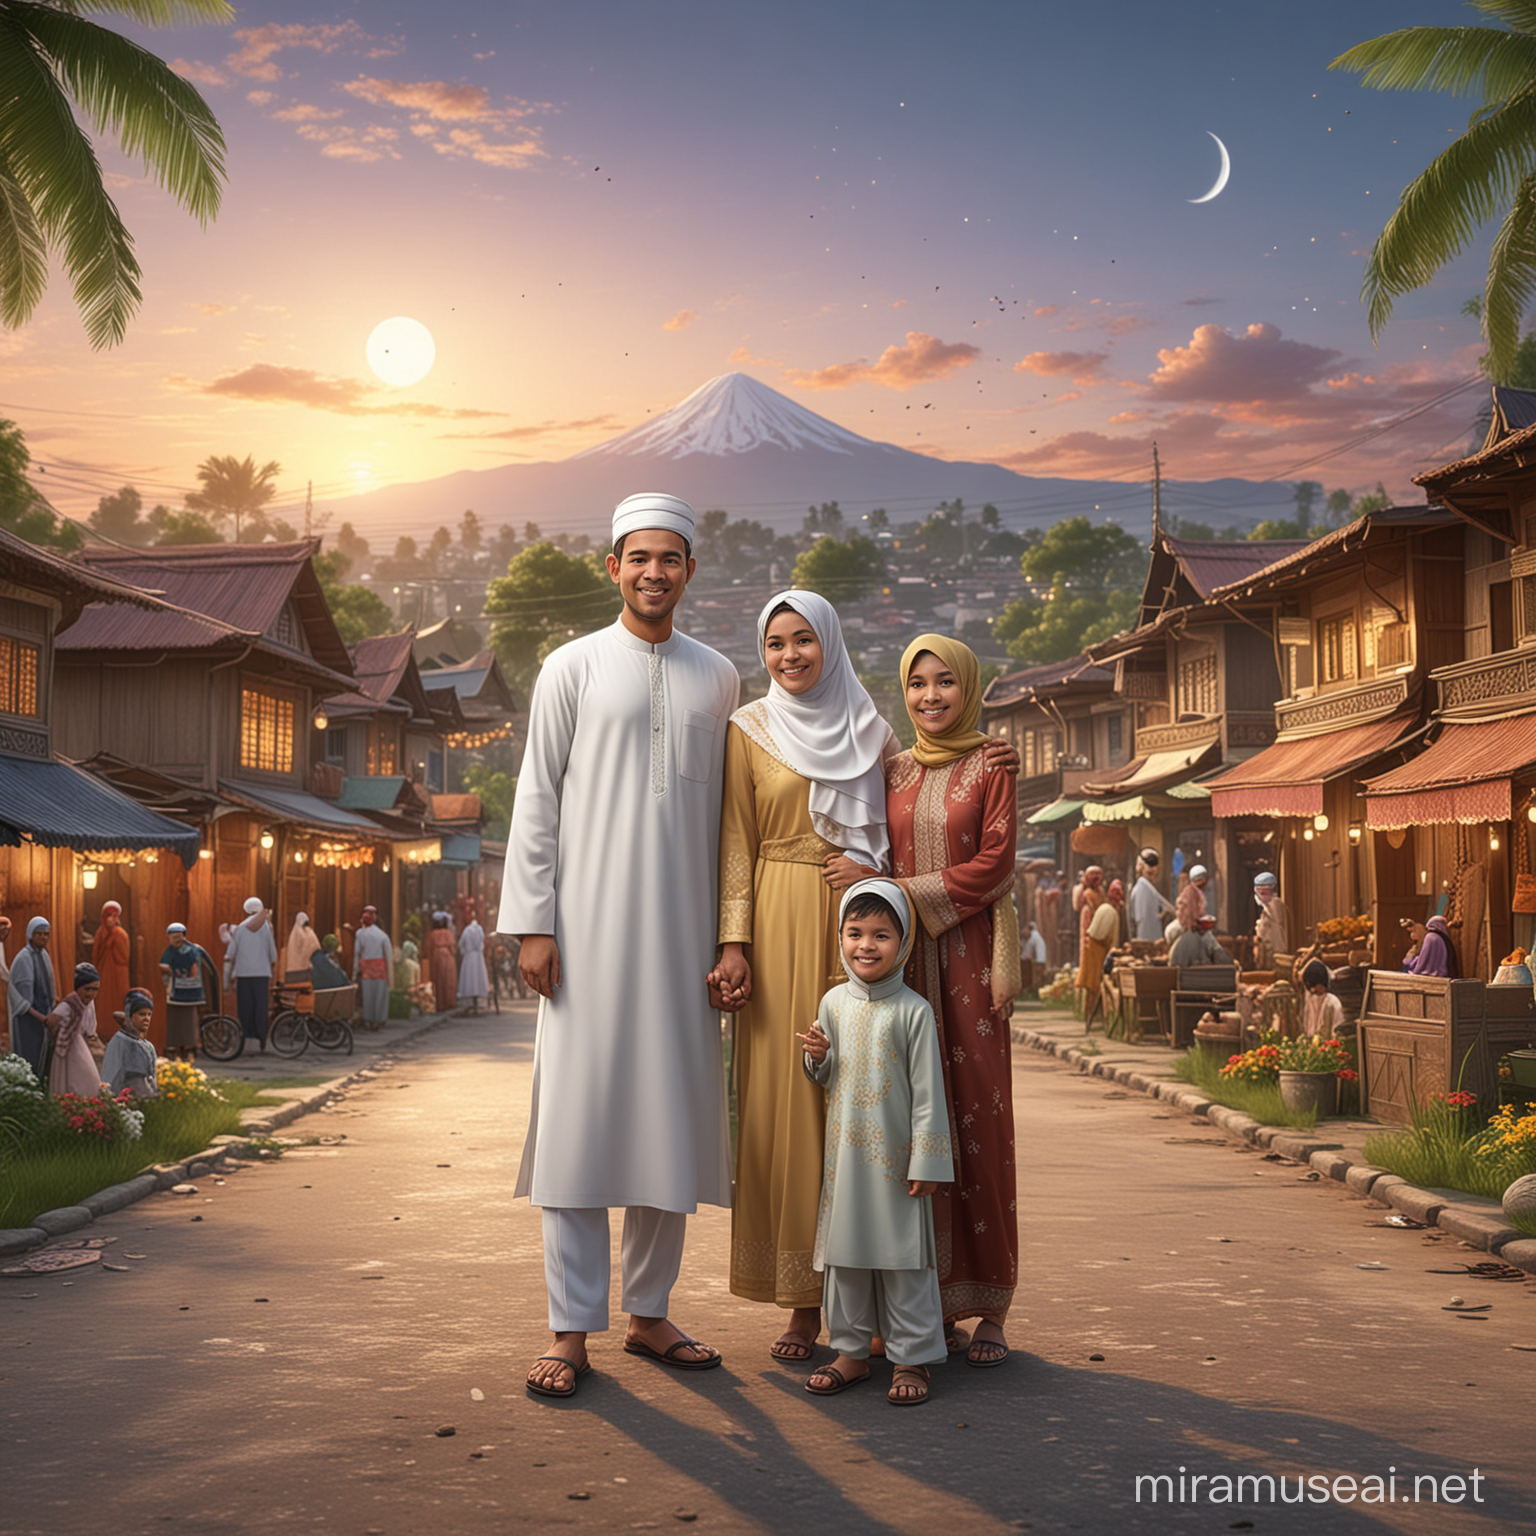 Eid alFitr Celebration Indonesian Muslim Family in Vibrant Village Setting